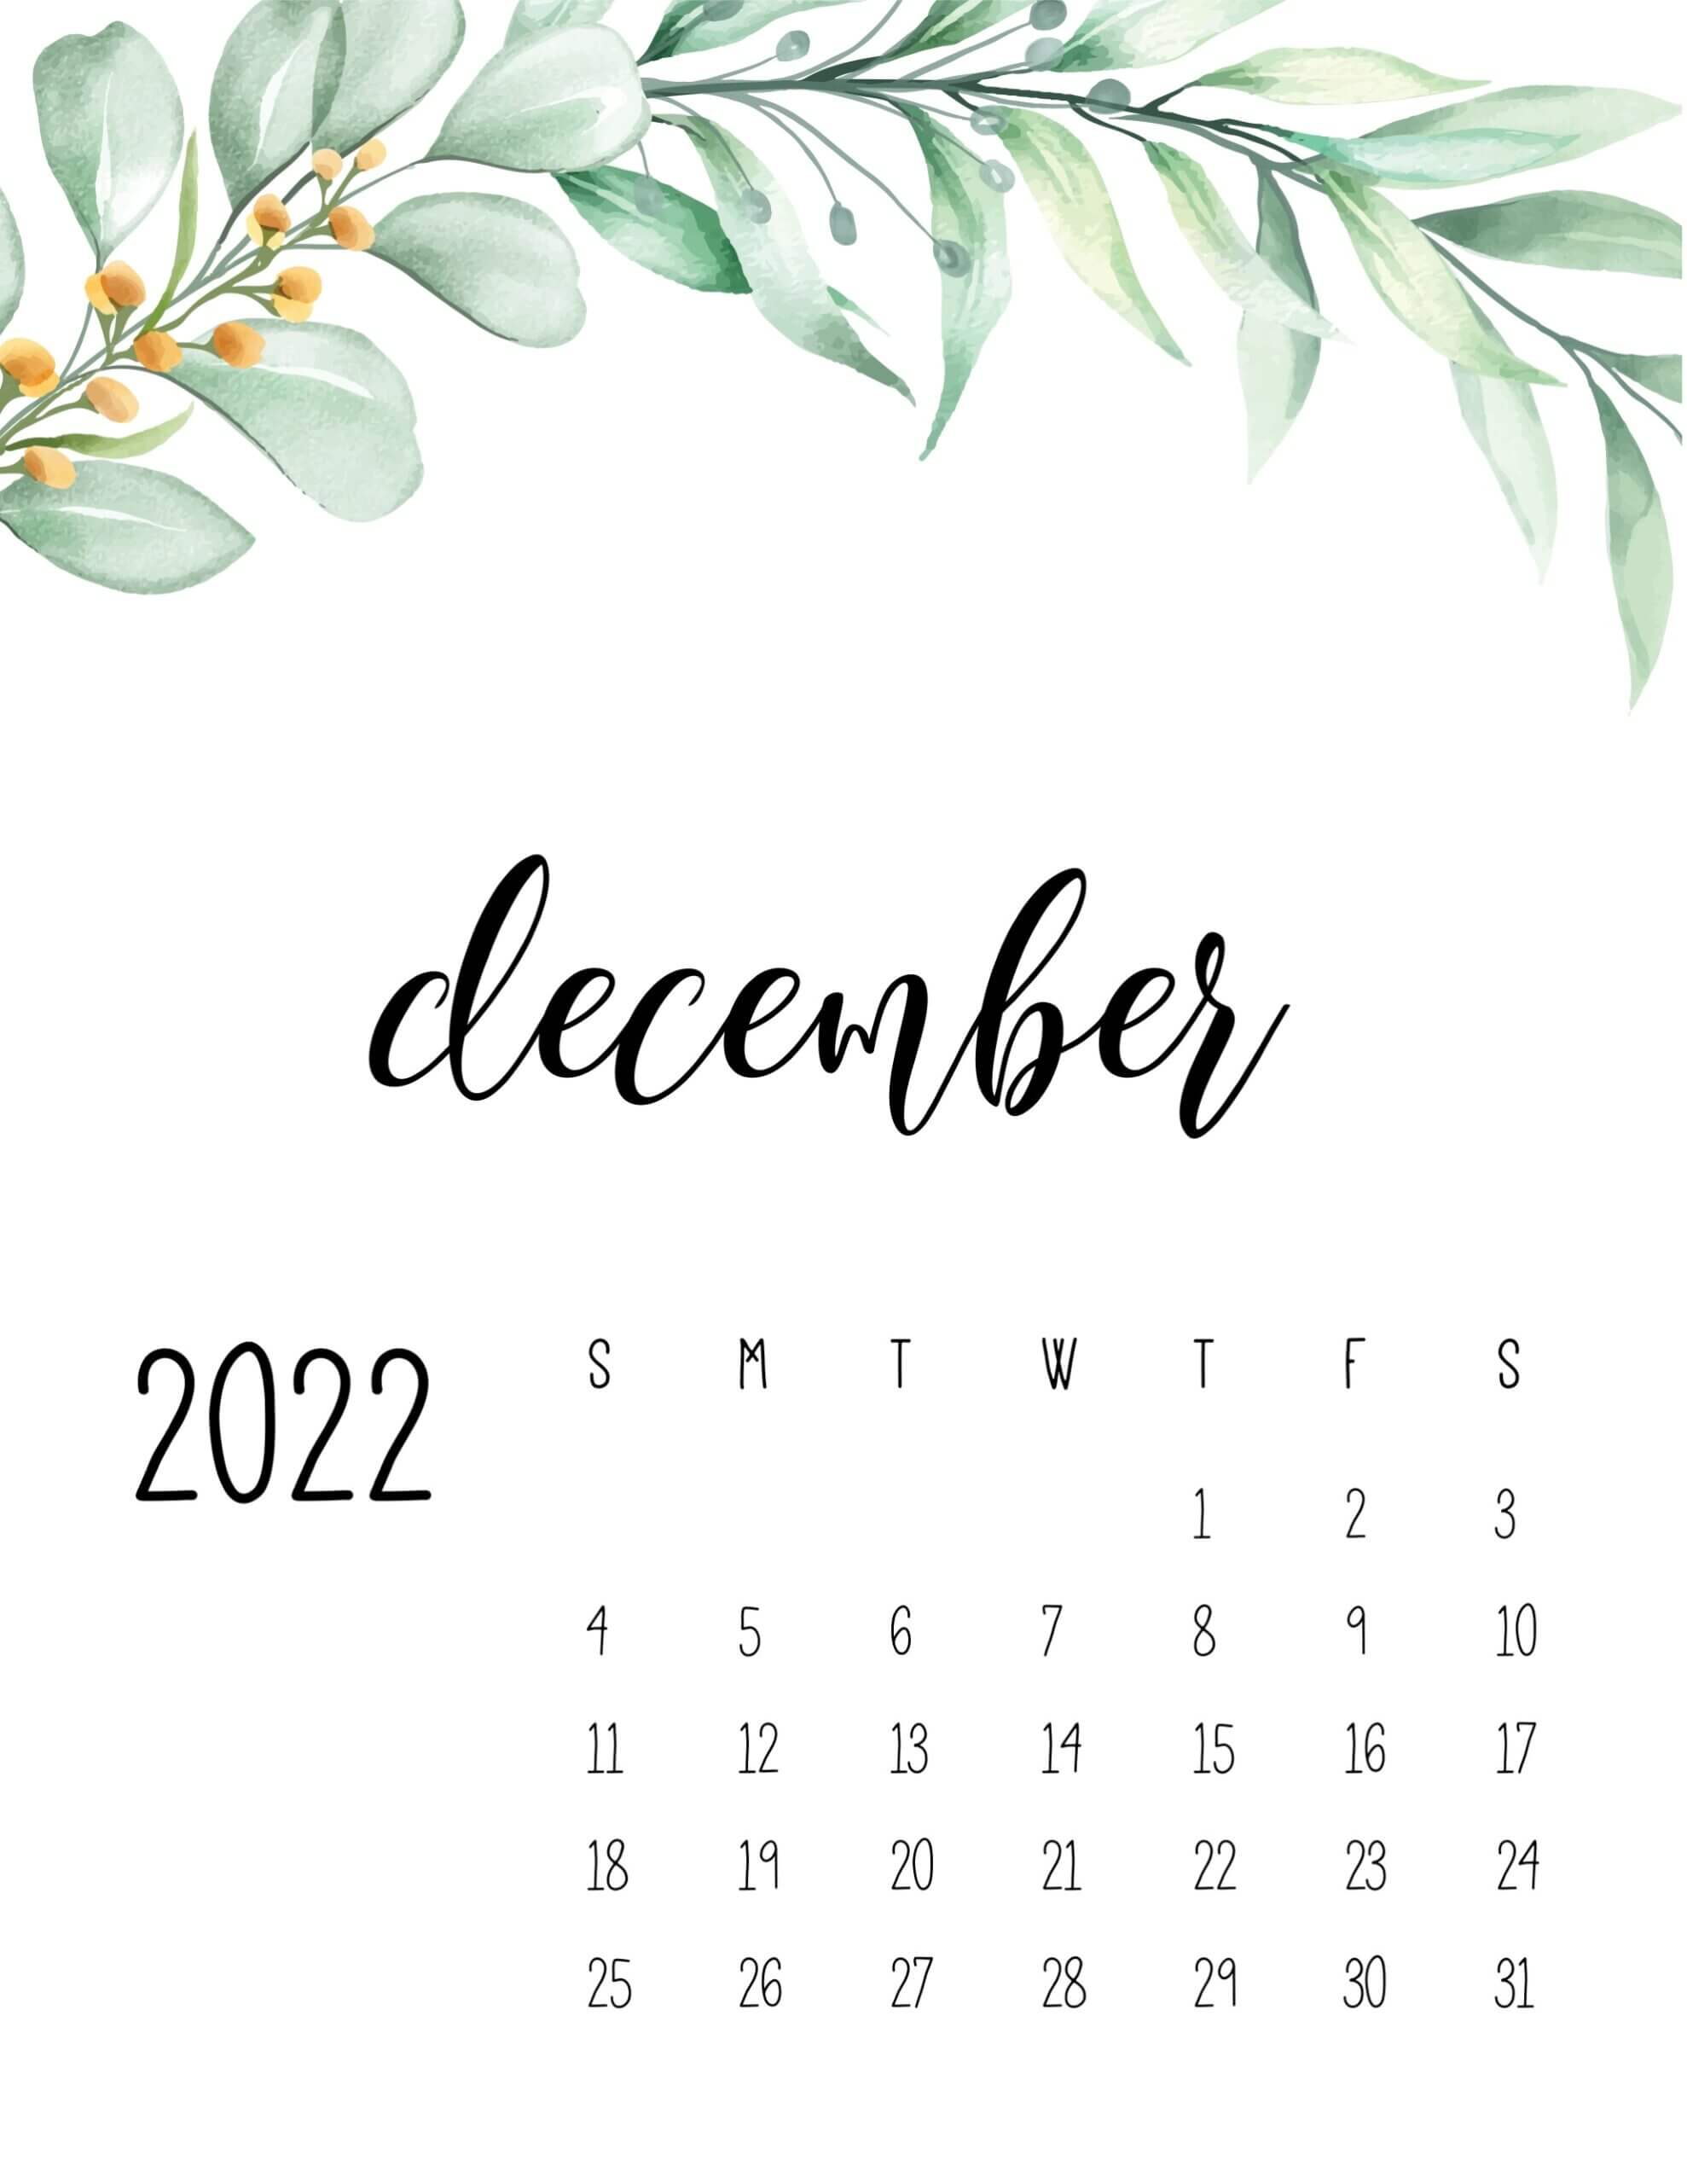 Floral December 2022 Calendar Wallpaper for Desktop, Laptop, Smartphone,  and iPhone